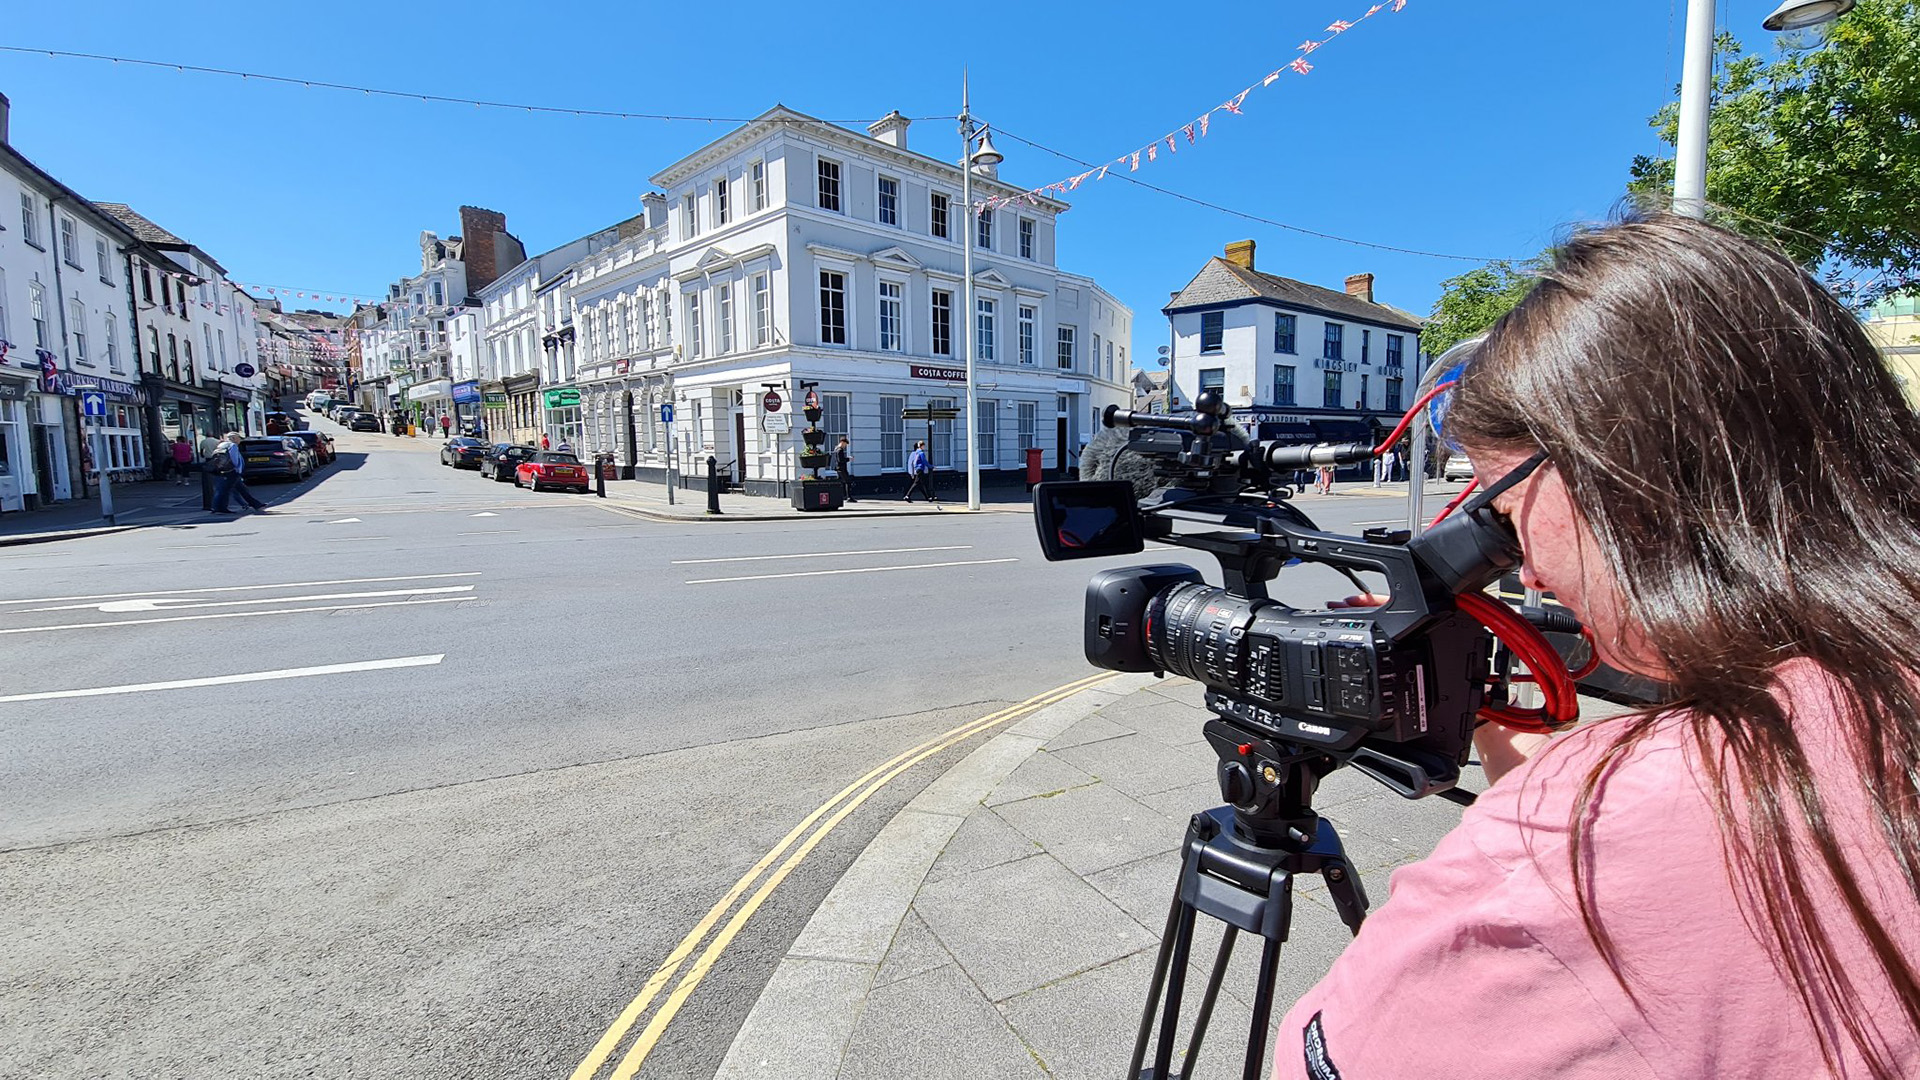 Katie Collins films for Rebel Boy Media in Bideford, Devon